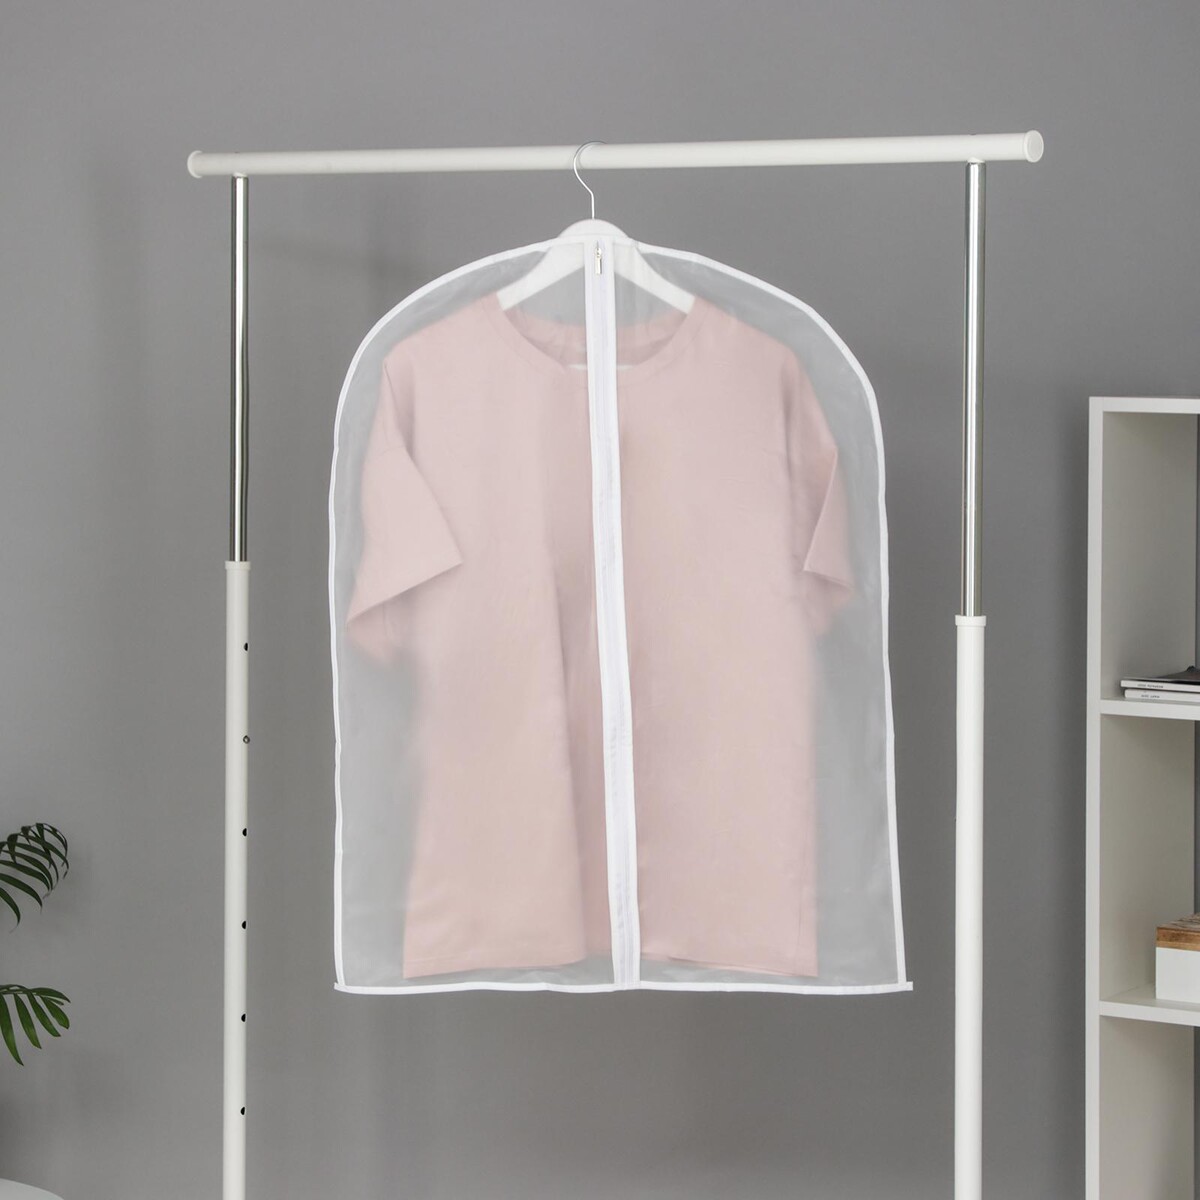 Чехол для одежды плотный доляна, 60×80 см, peva, цвет белый чехол для одежды ladо́m 60×137 см плотный peva серый